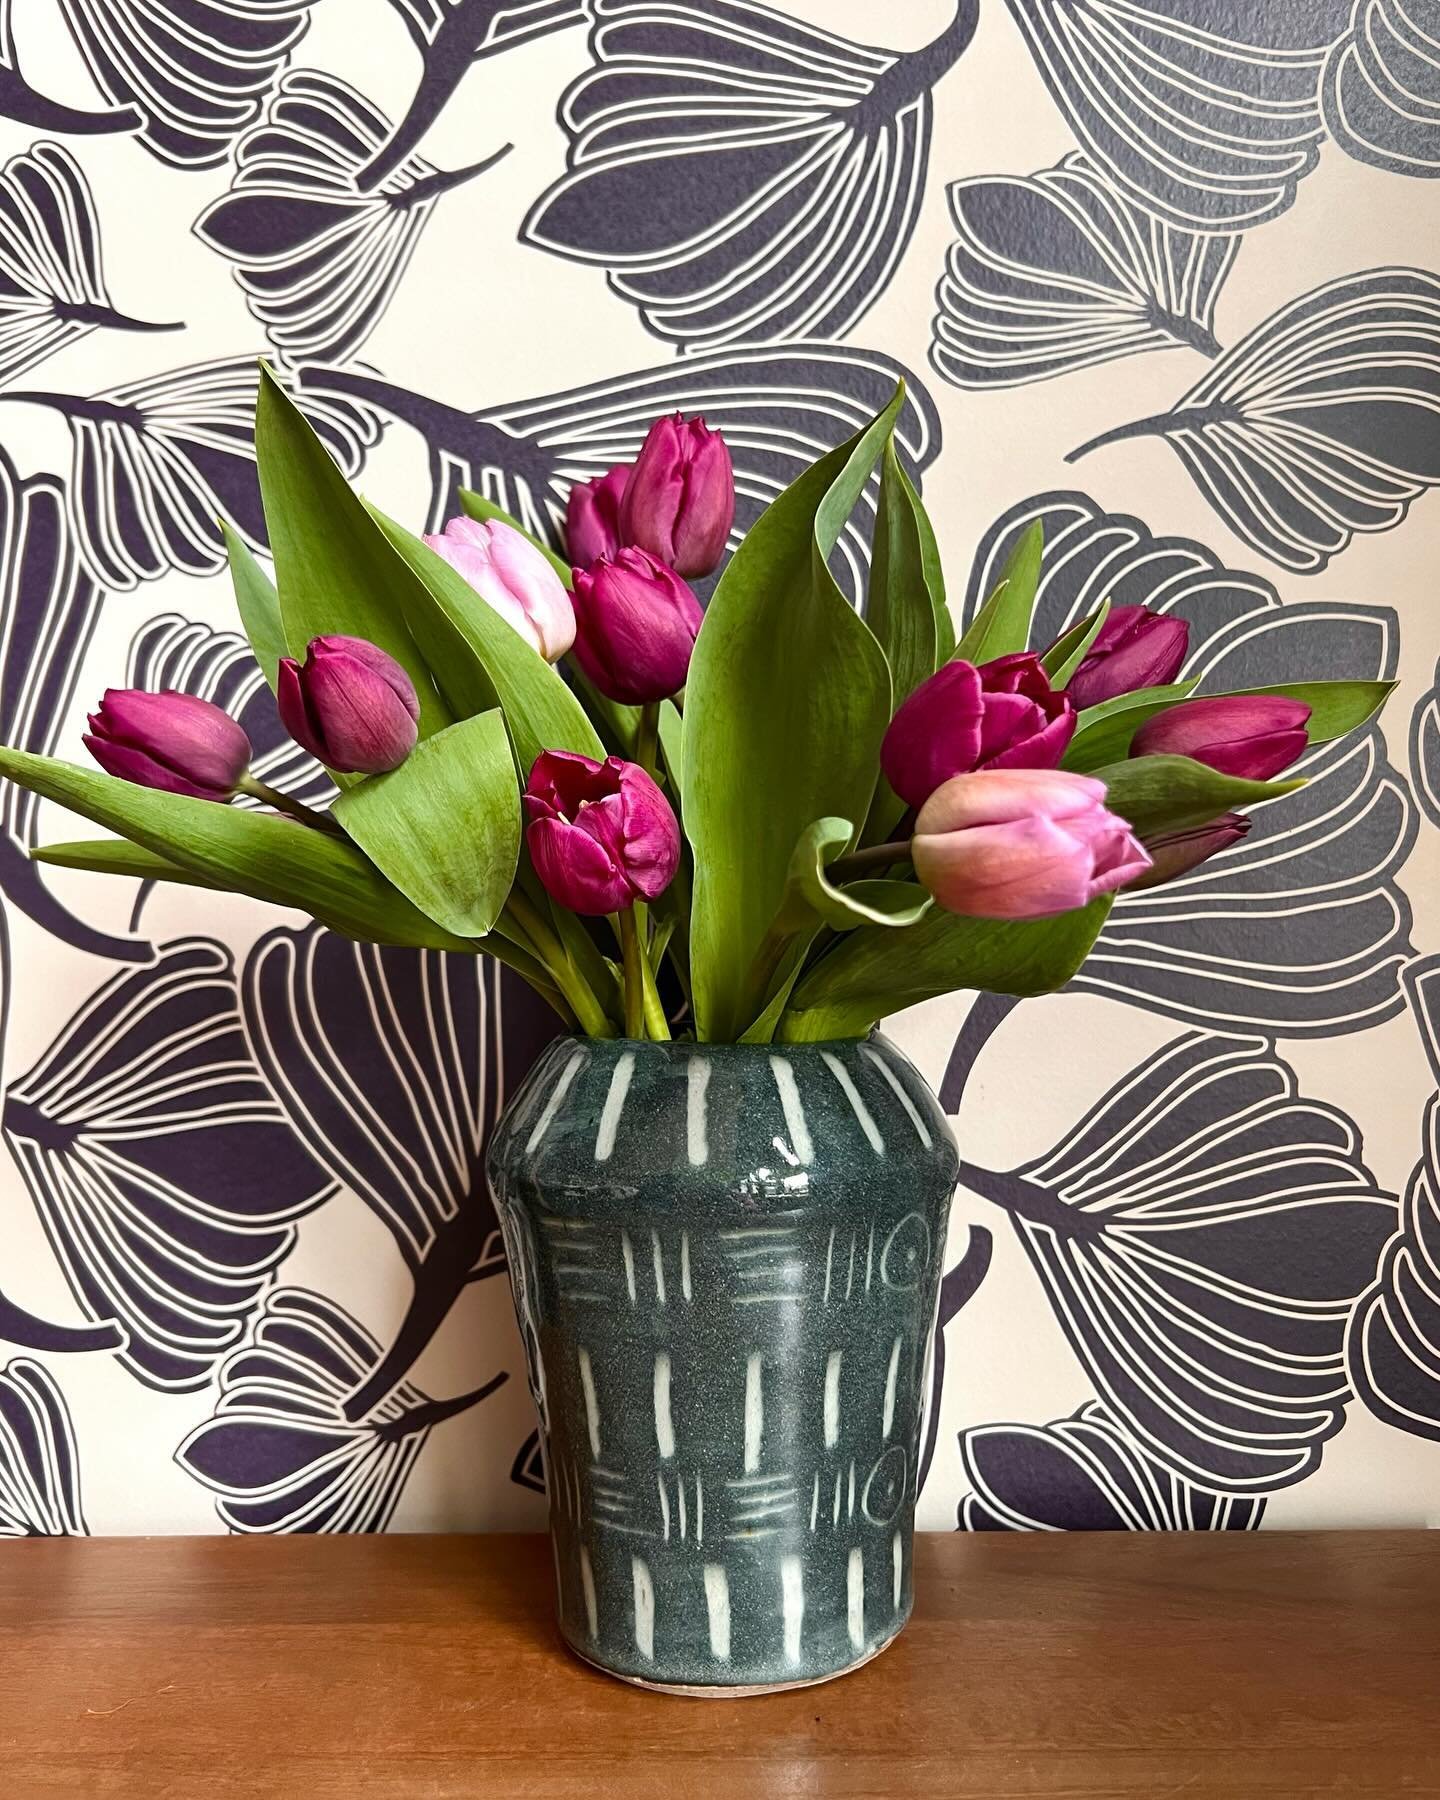 Hand carved stoneware vase available in my shop! #slowflowers #slowceramics #tulips #ceramics #ceramicist